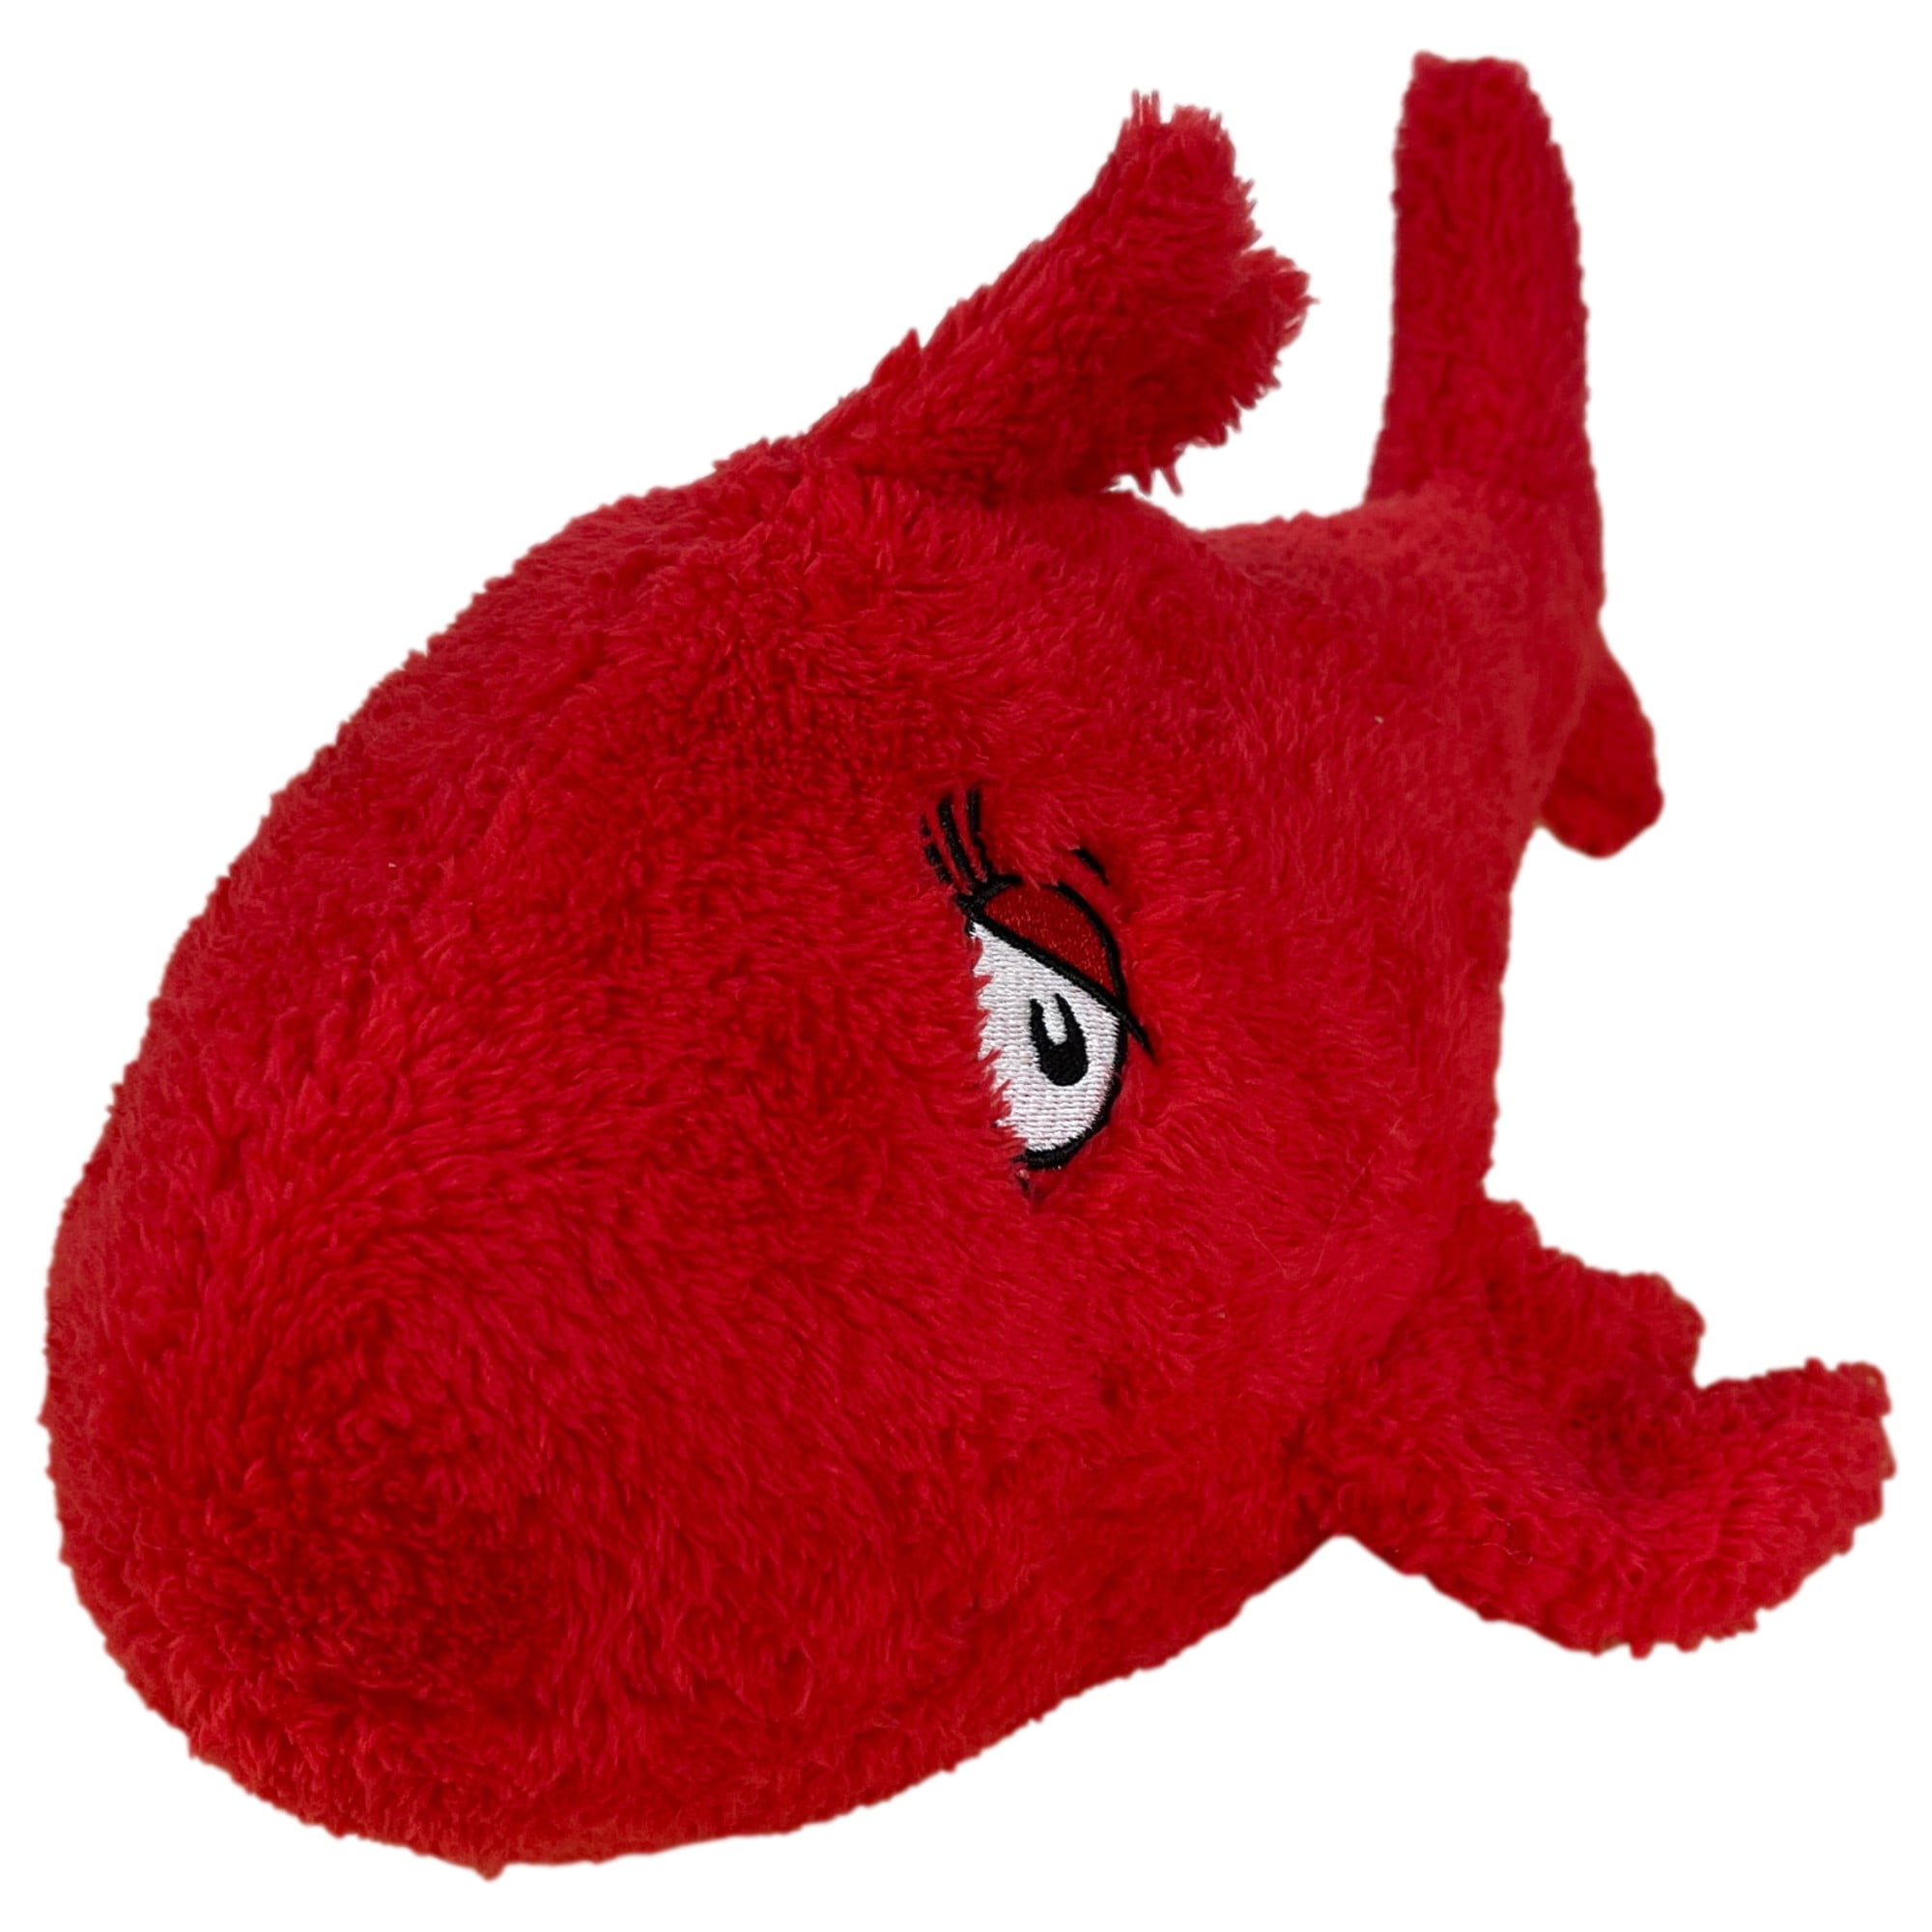 Dr Seuss Red Fish Plush Kohl’s Cares For Kids Stuffed Animal 14” 